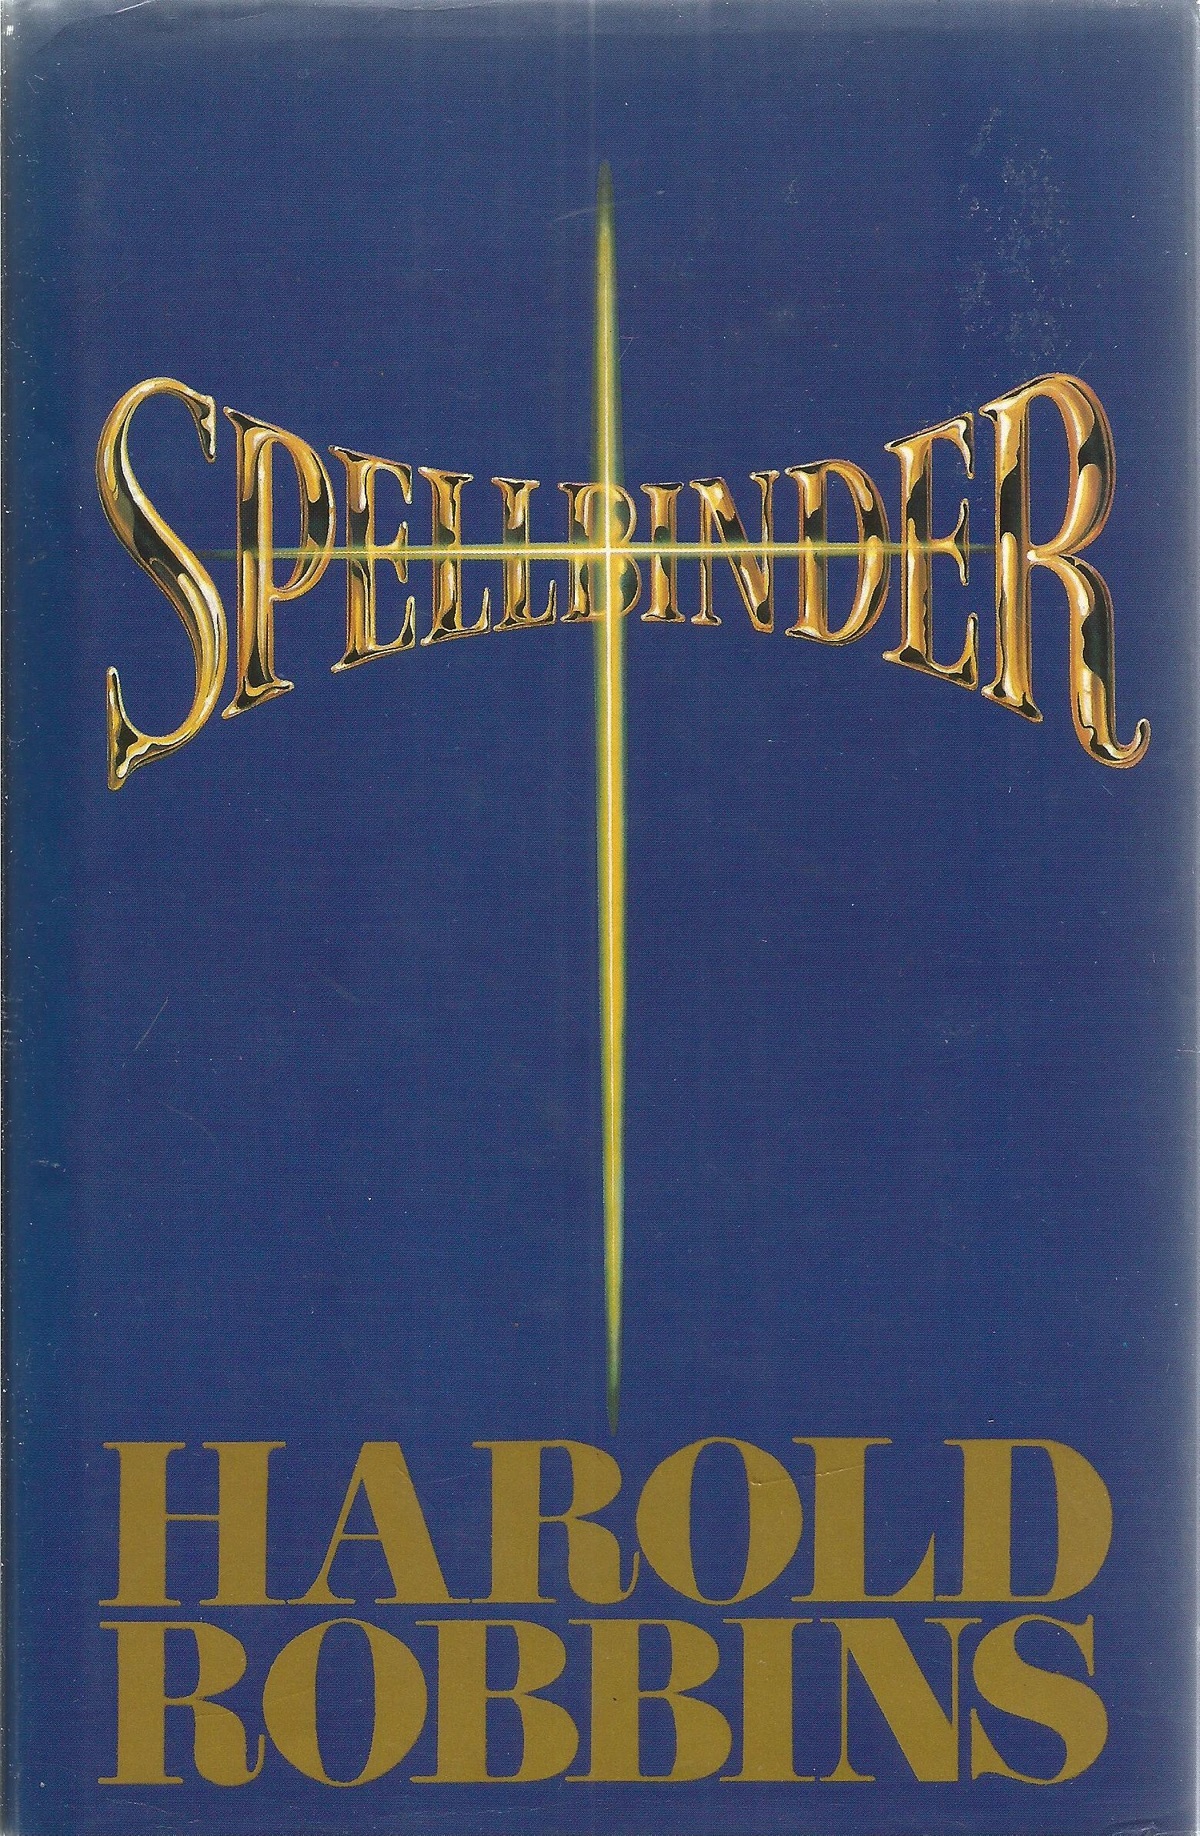 Spellbinder by Harold Robbins Hardback Book 1983 published by Book Club Associates slight ageing